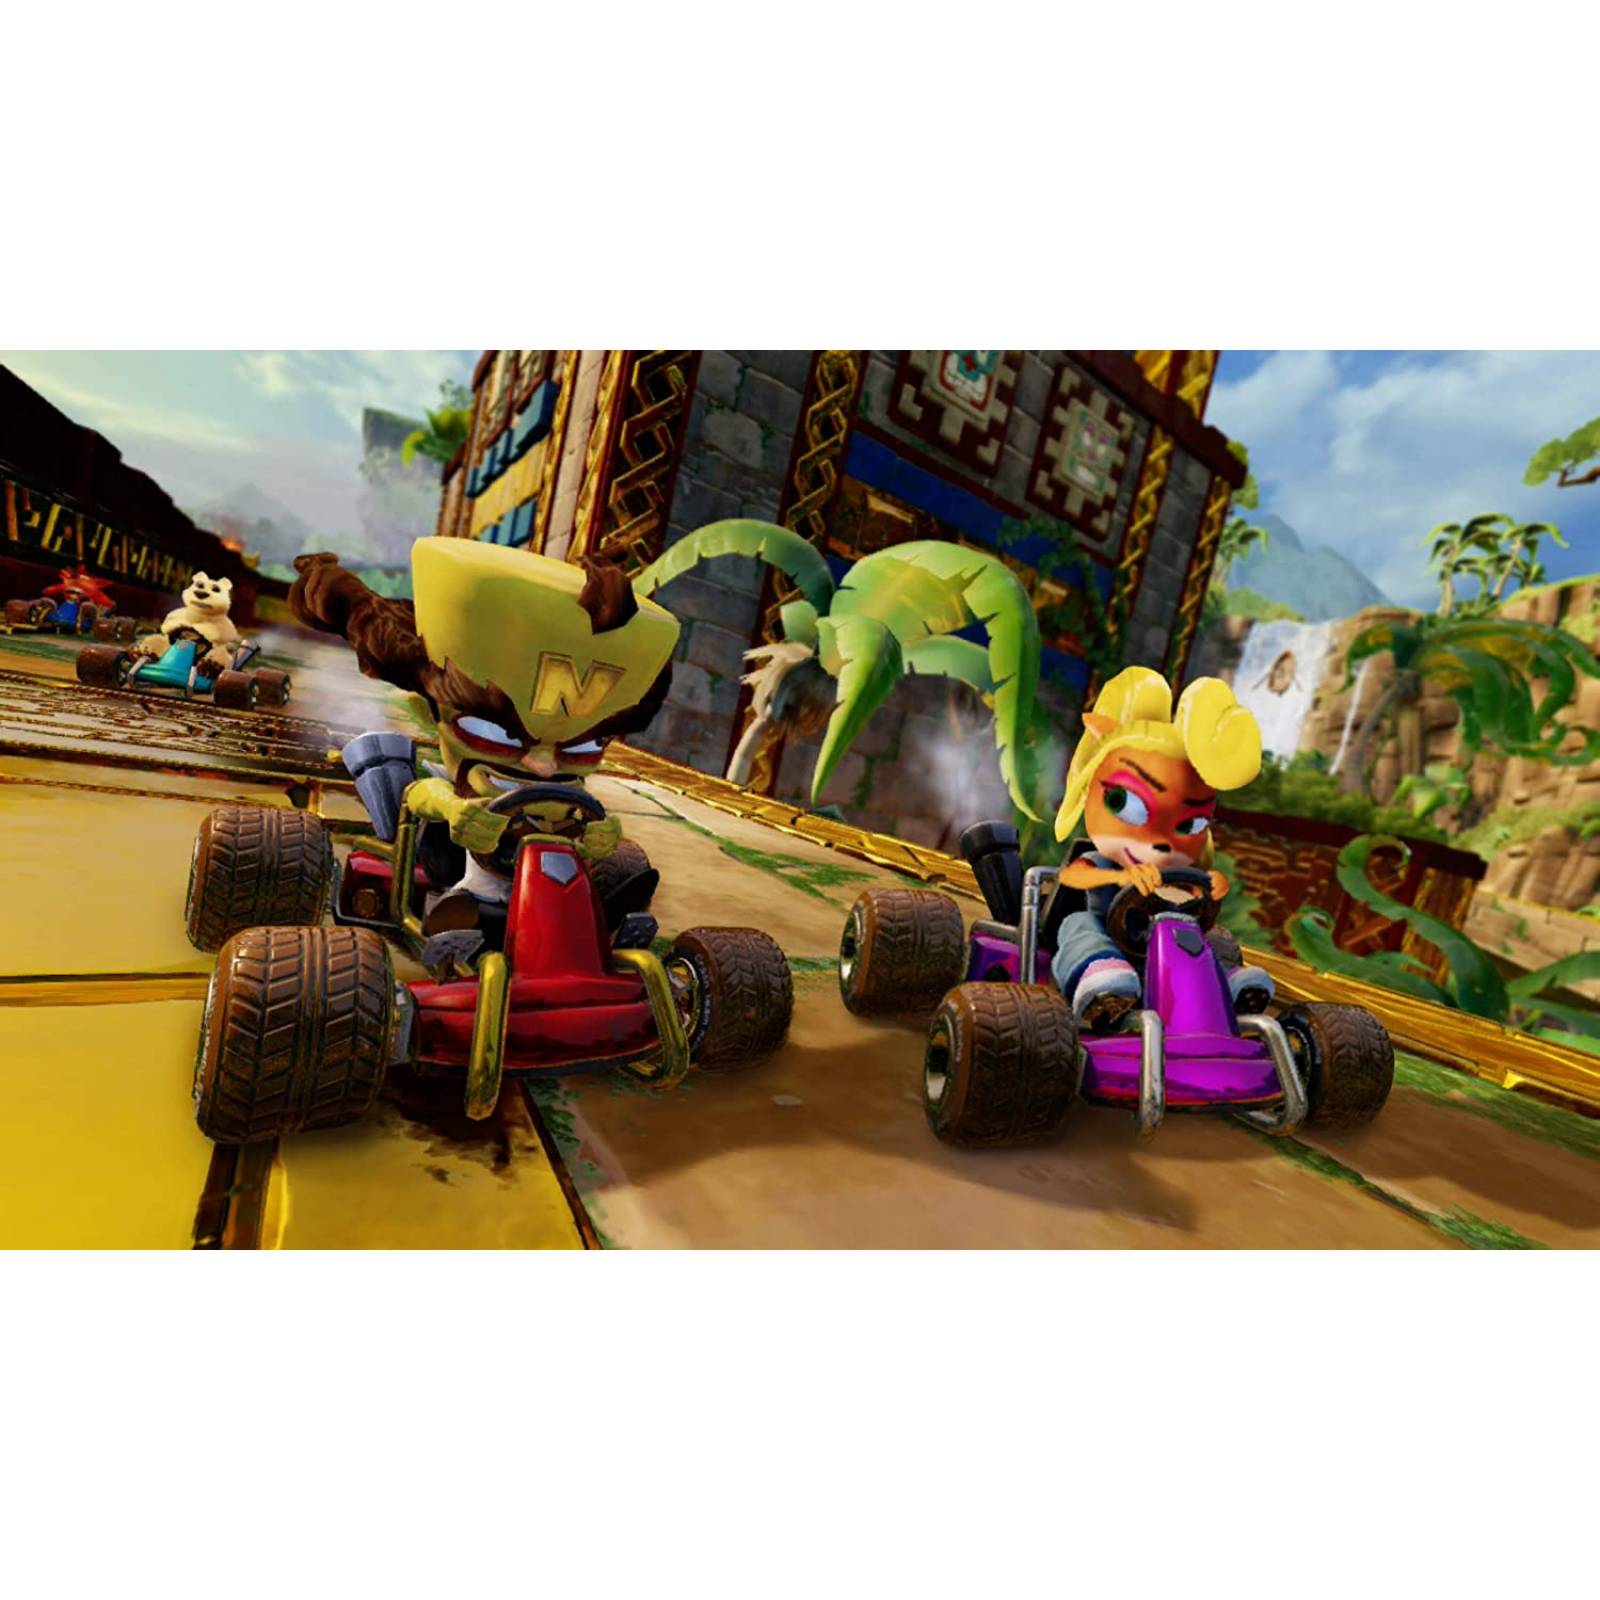 Crash Team Racing   Nitro Fueled  Nintendo Switch 